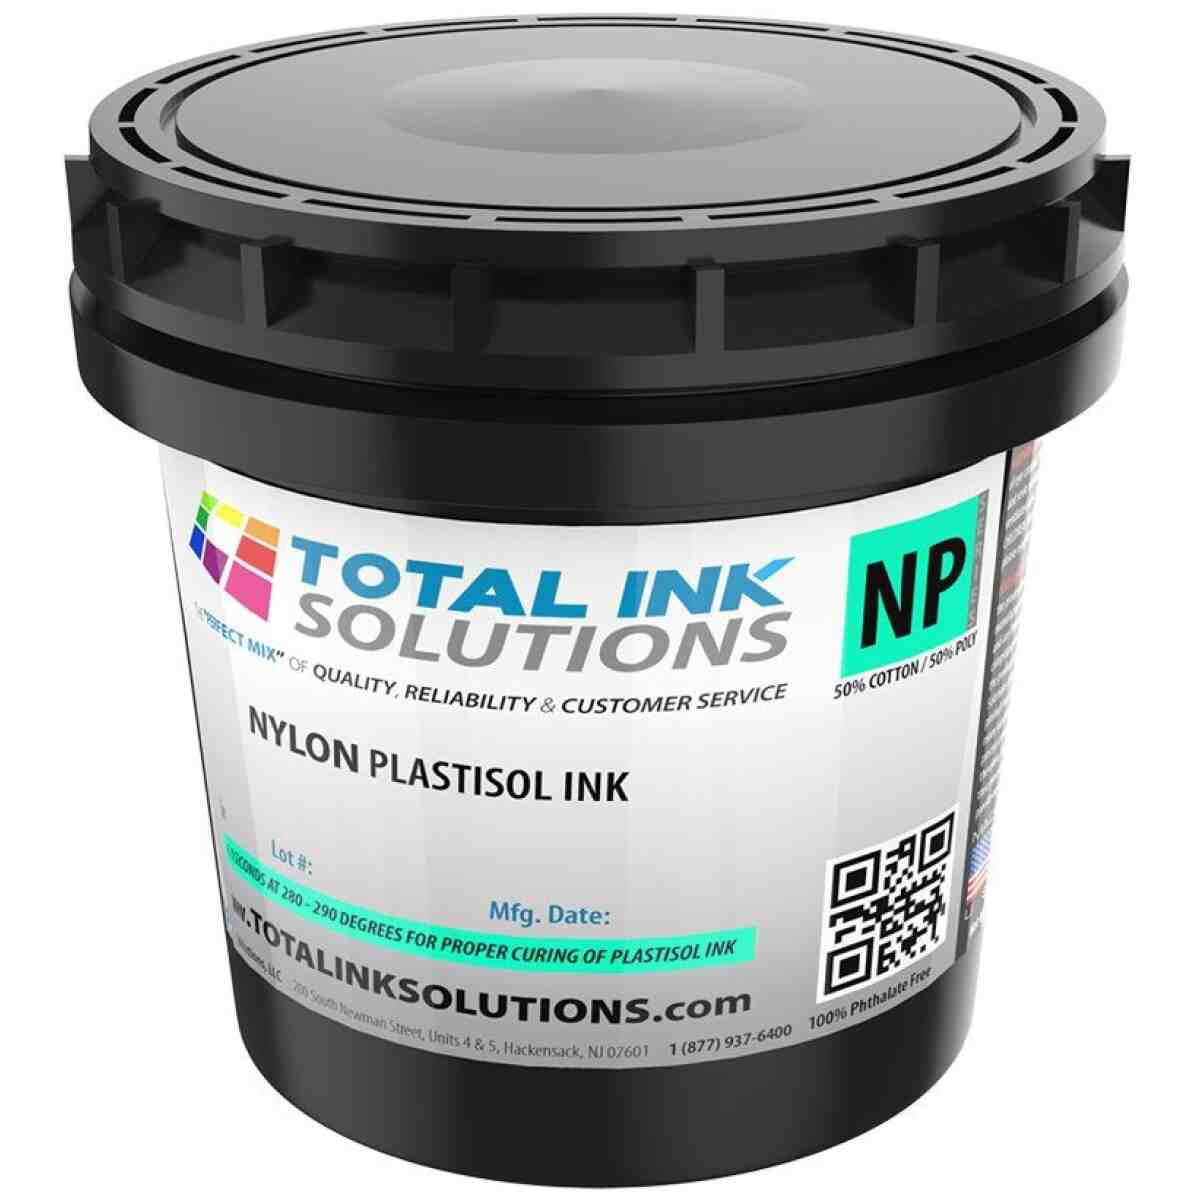 Nylon Plastisol Ink Bleed Resistant - Pint TOTAL INK SOLUTIONS®